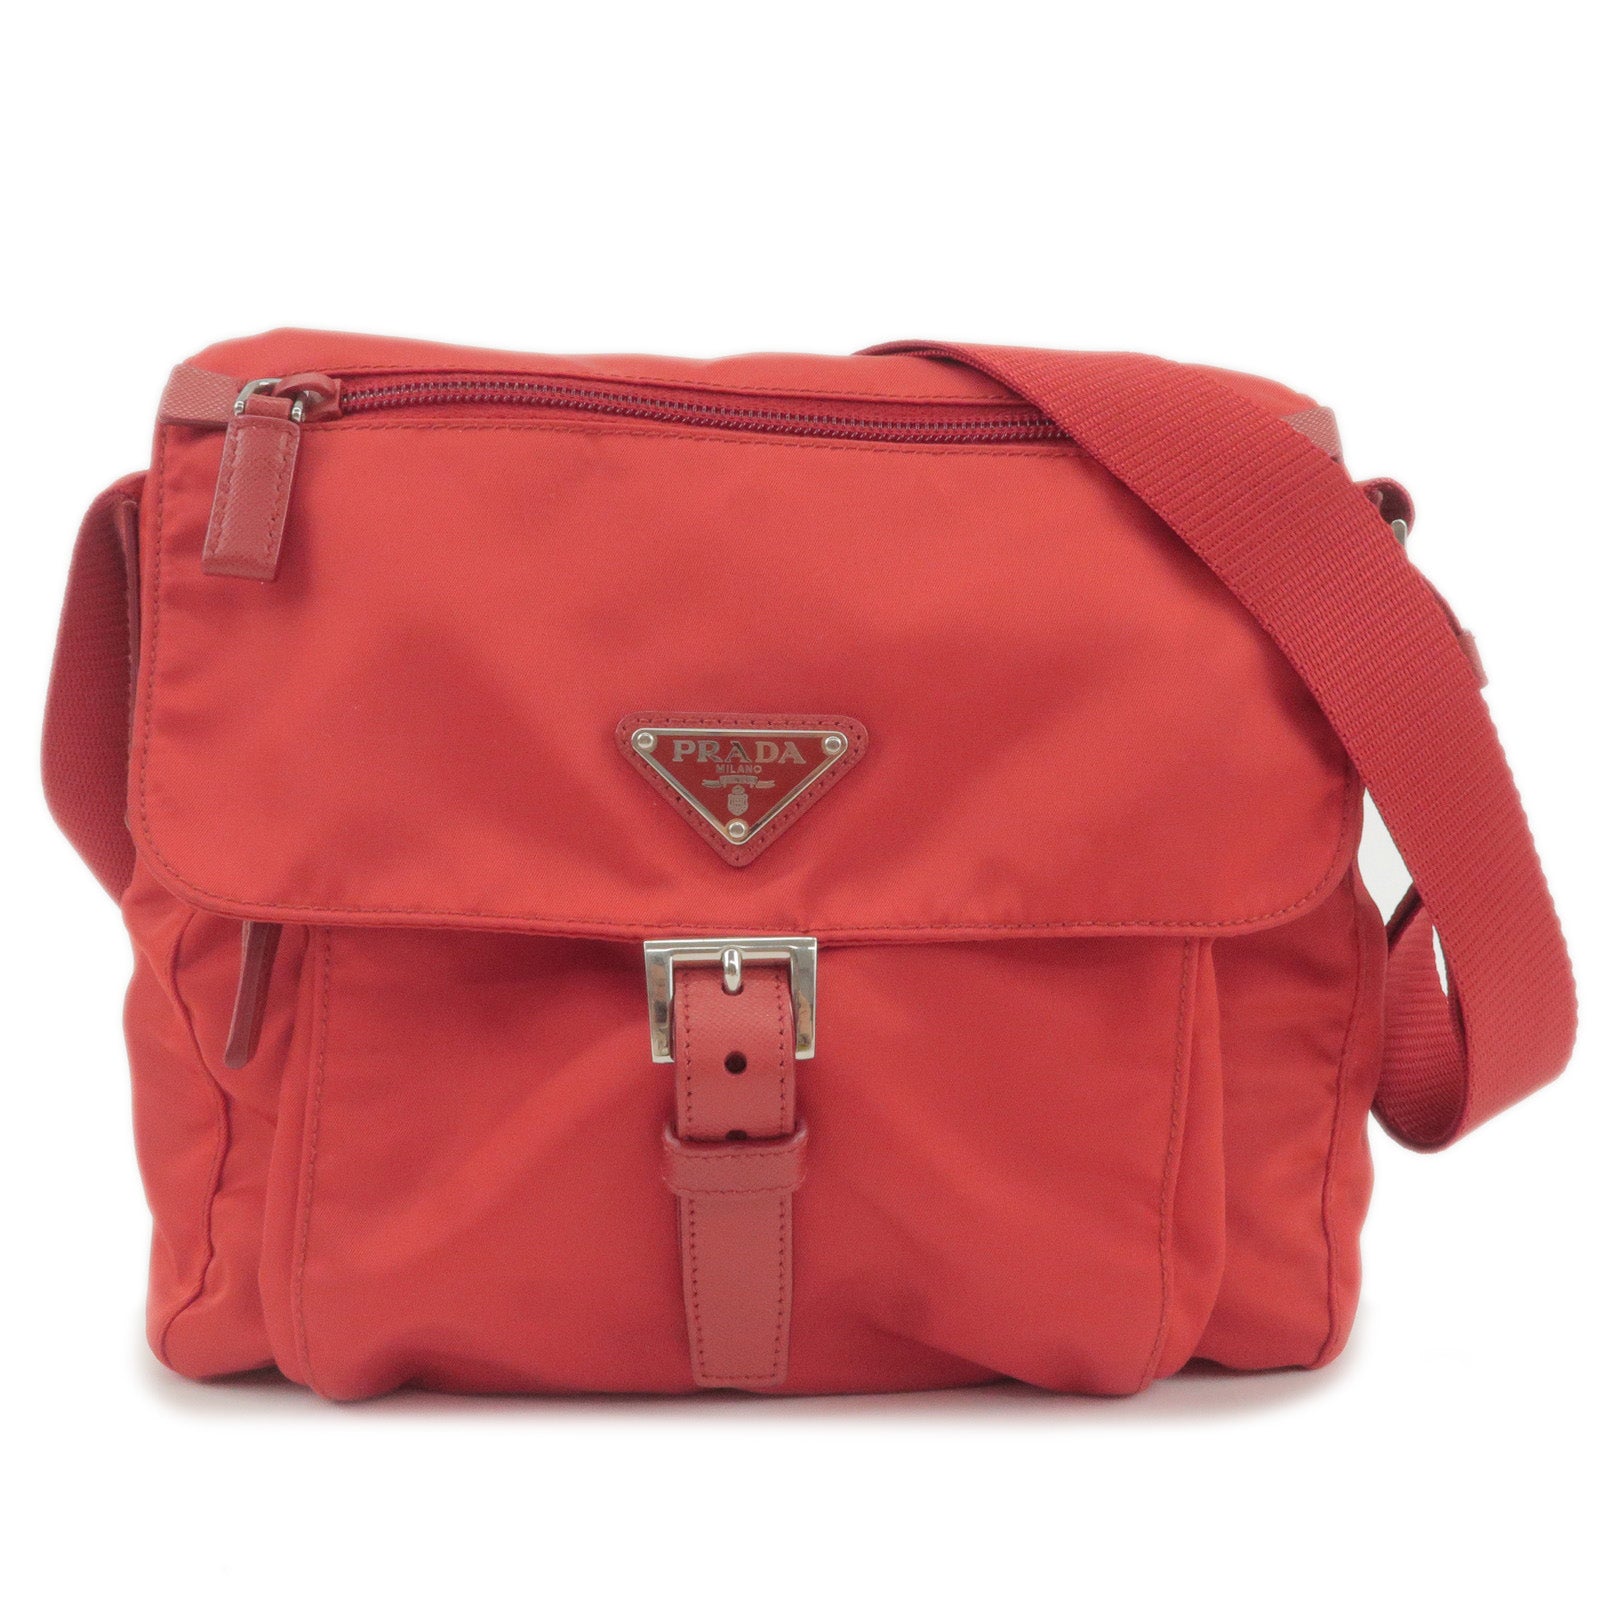 PRADA-Logo-Nylon-Leather-Shoulder-Bag-Cross-Body-Bag-Red